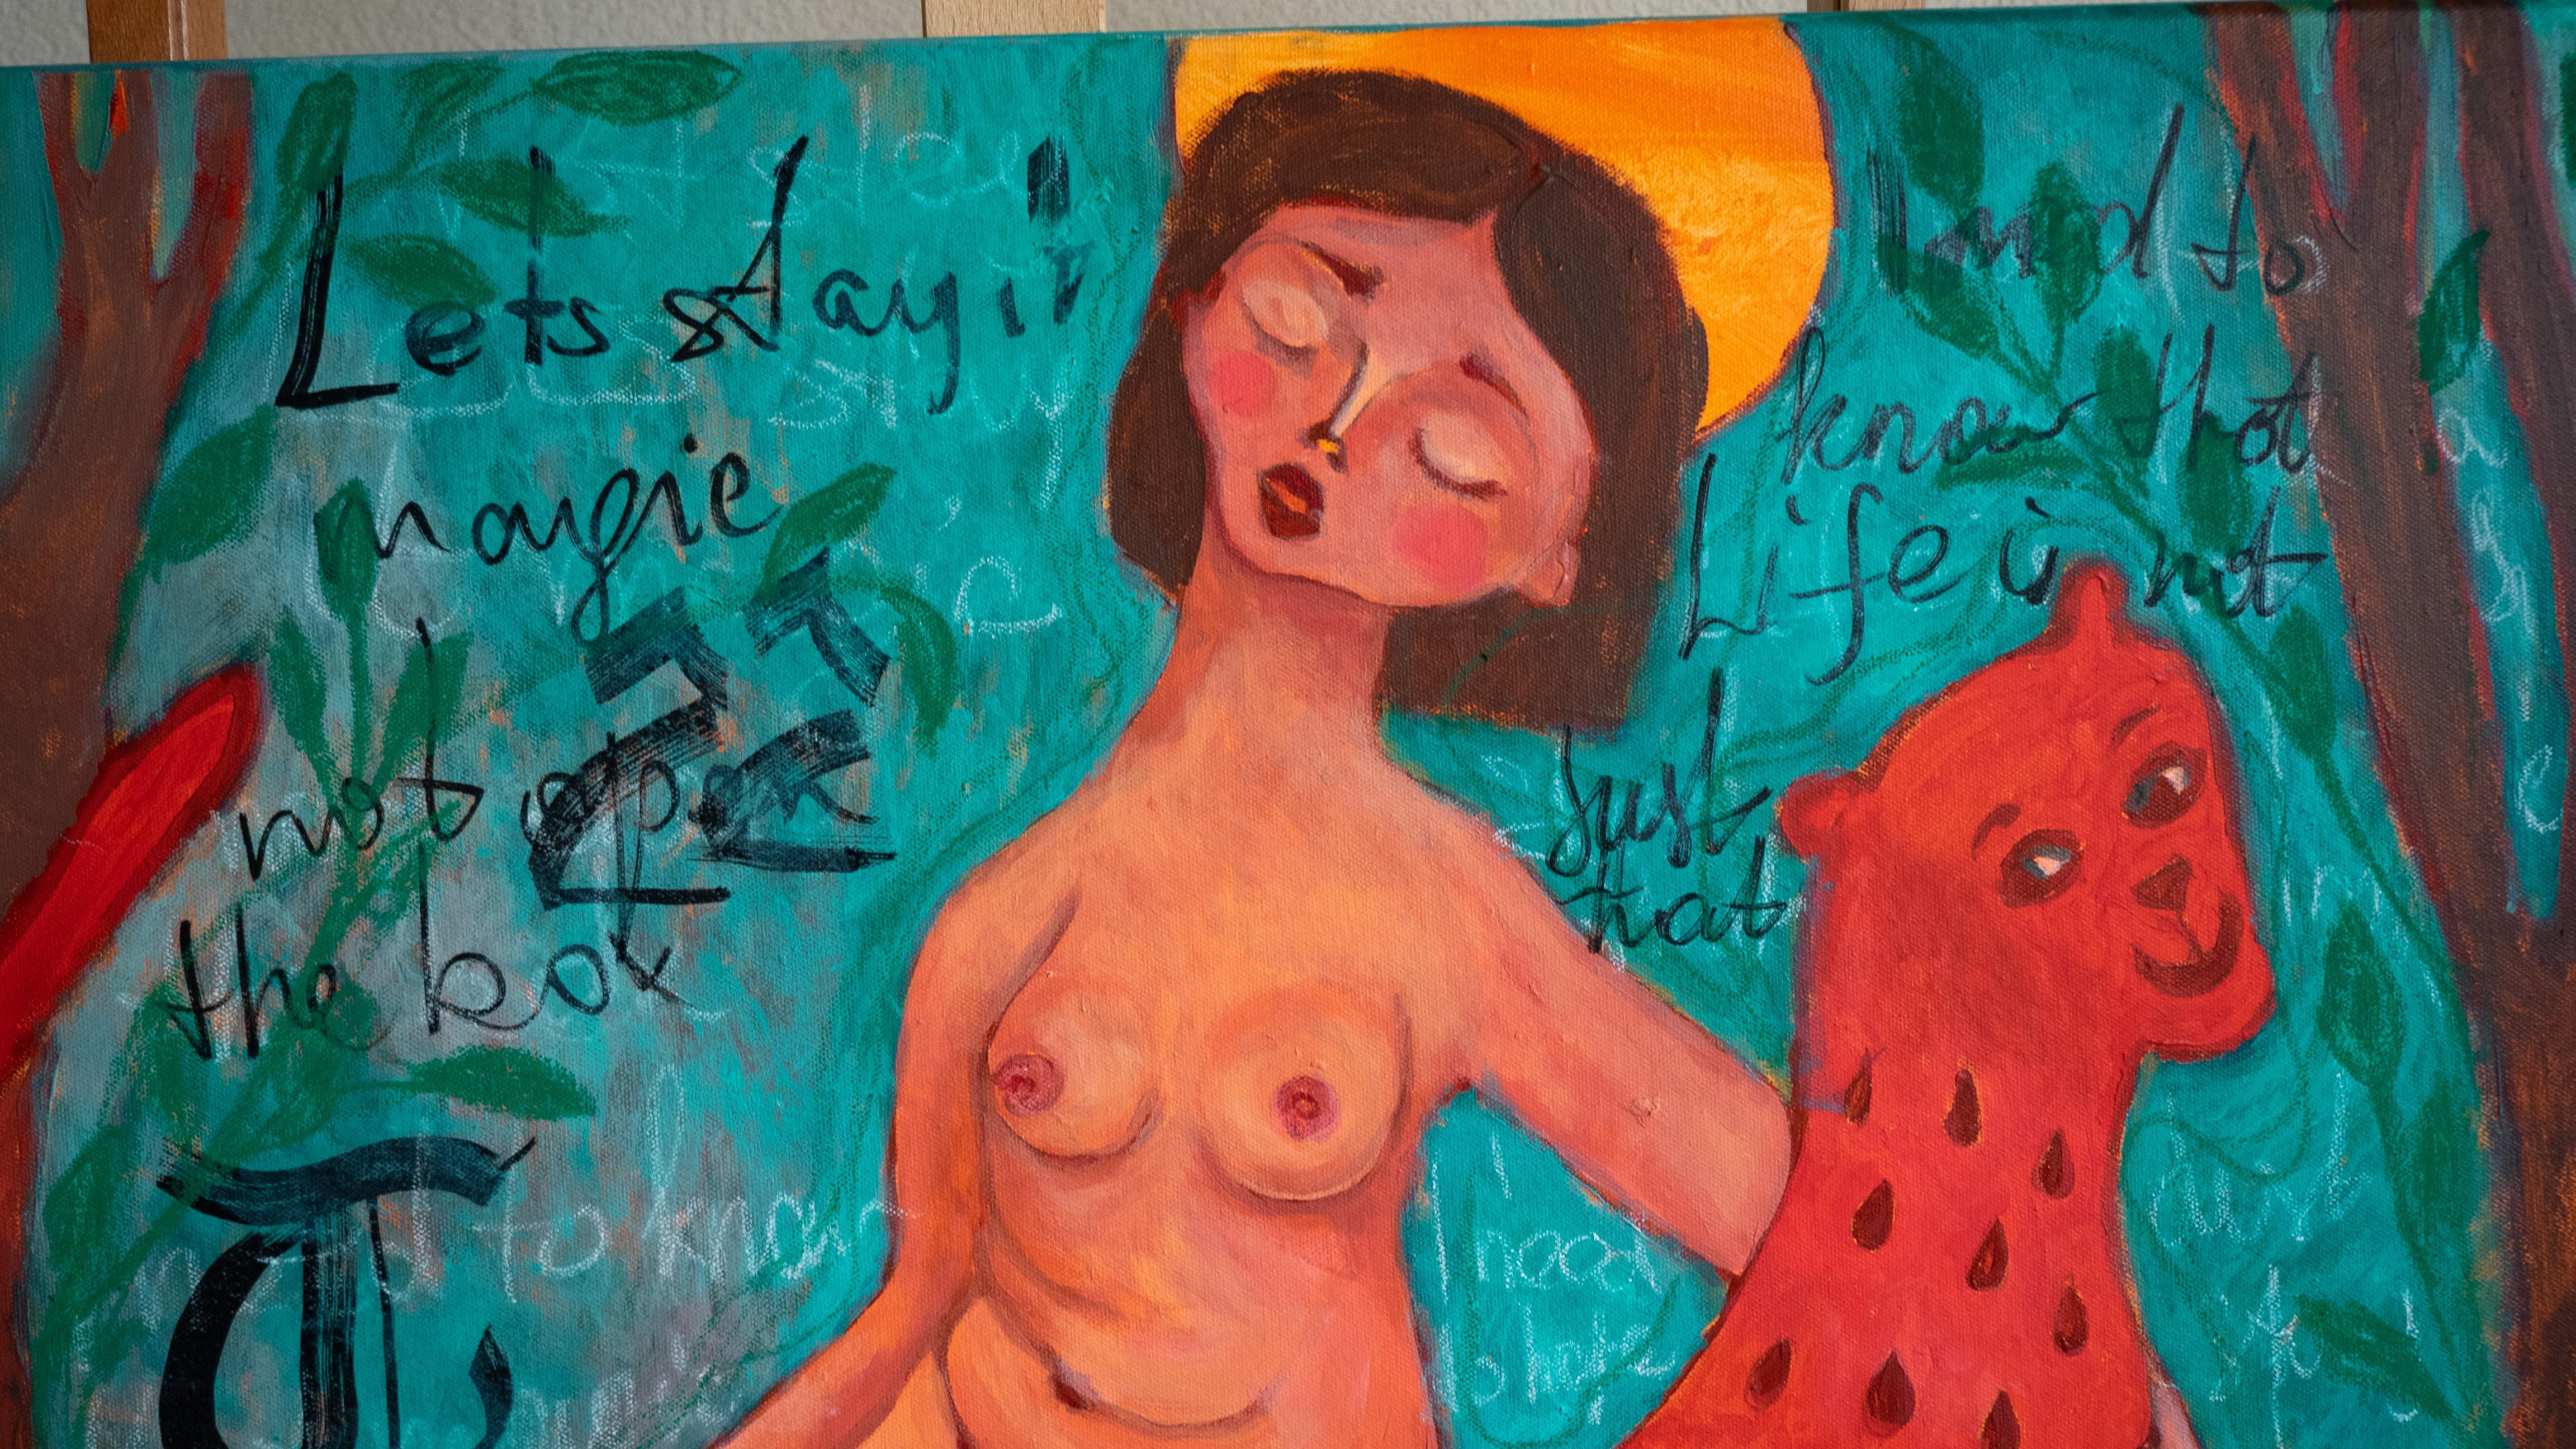 Ya no tengo miedo, colorido cuadro de Arte Naif Fiminista del artista ucraniano - Painting Contemporáneo de Dasha Pogodina